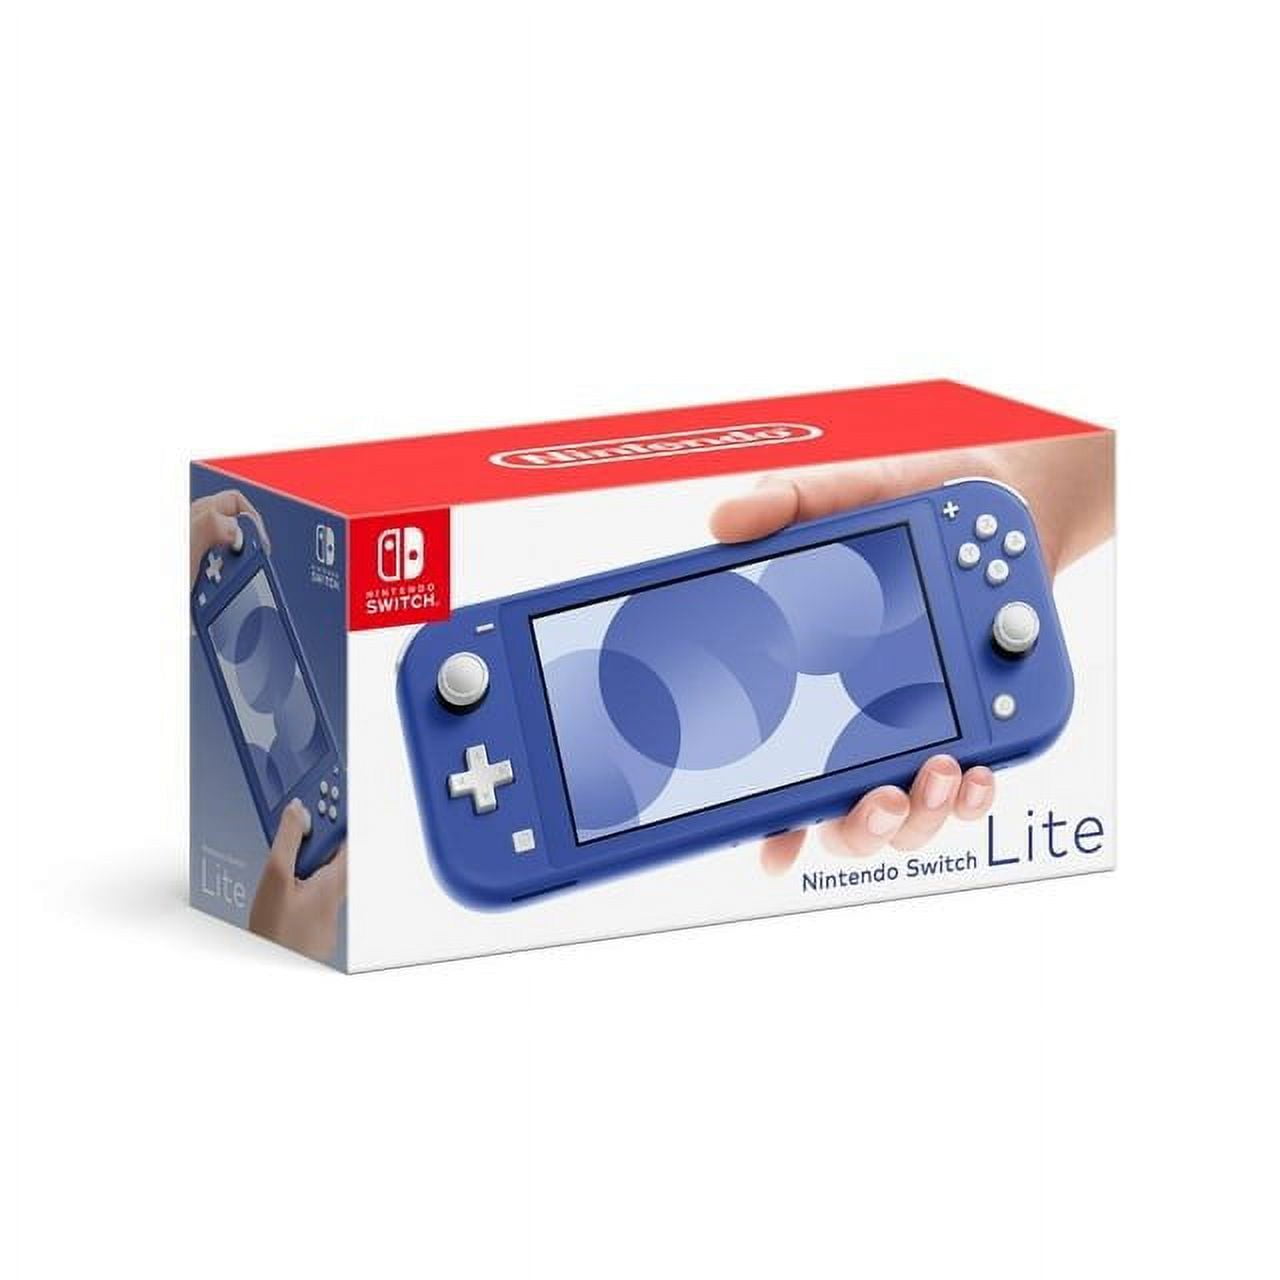 Nintendo Switch Lite Console, Blue - International Spec